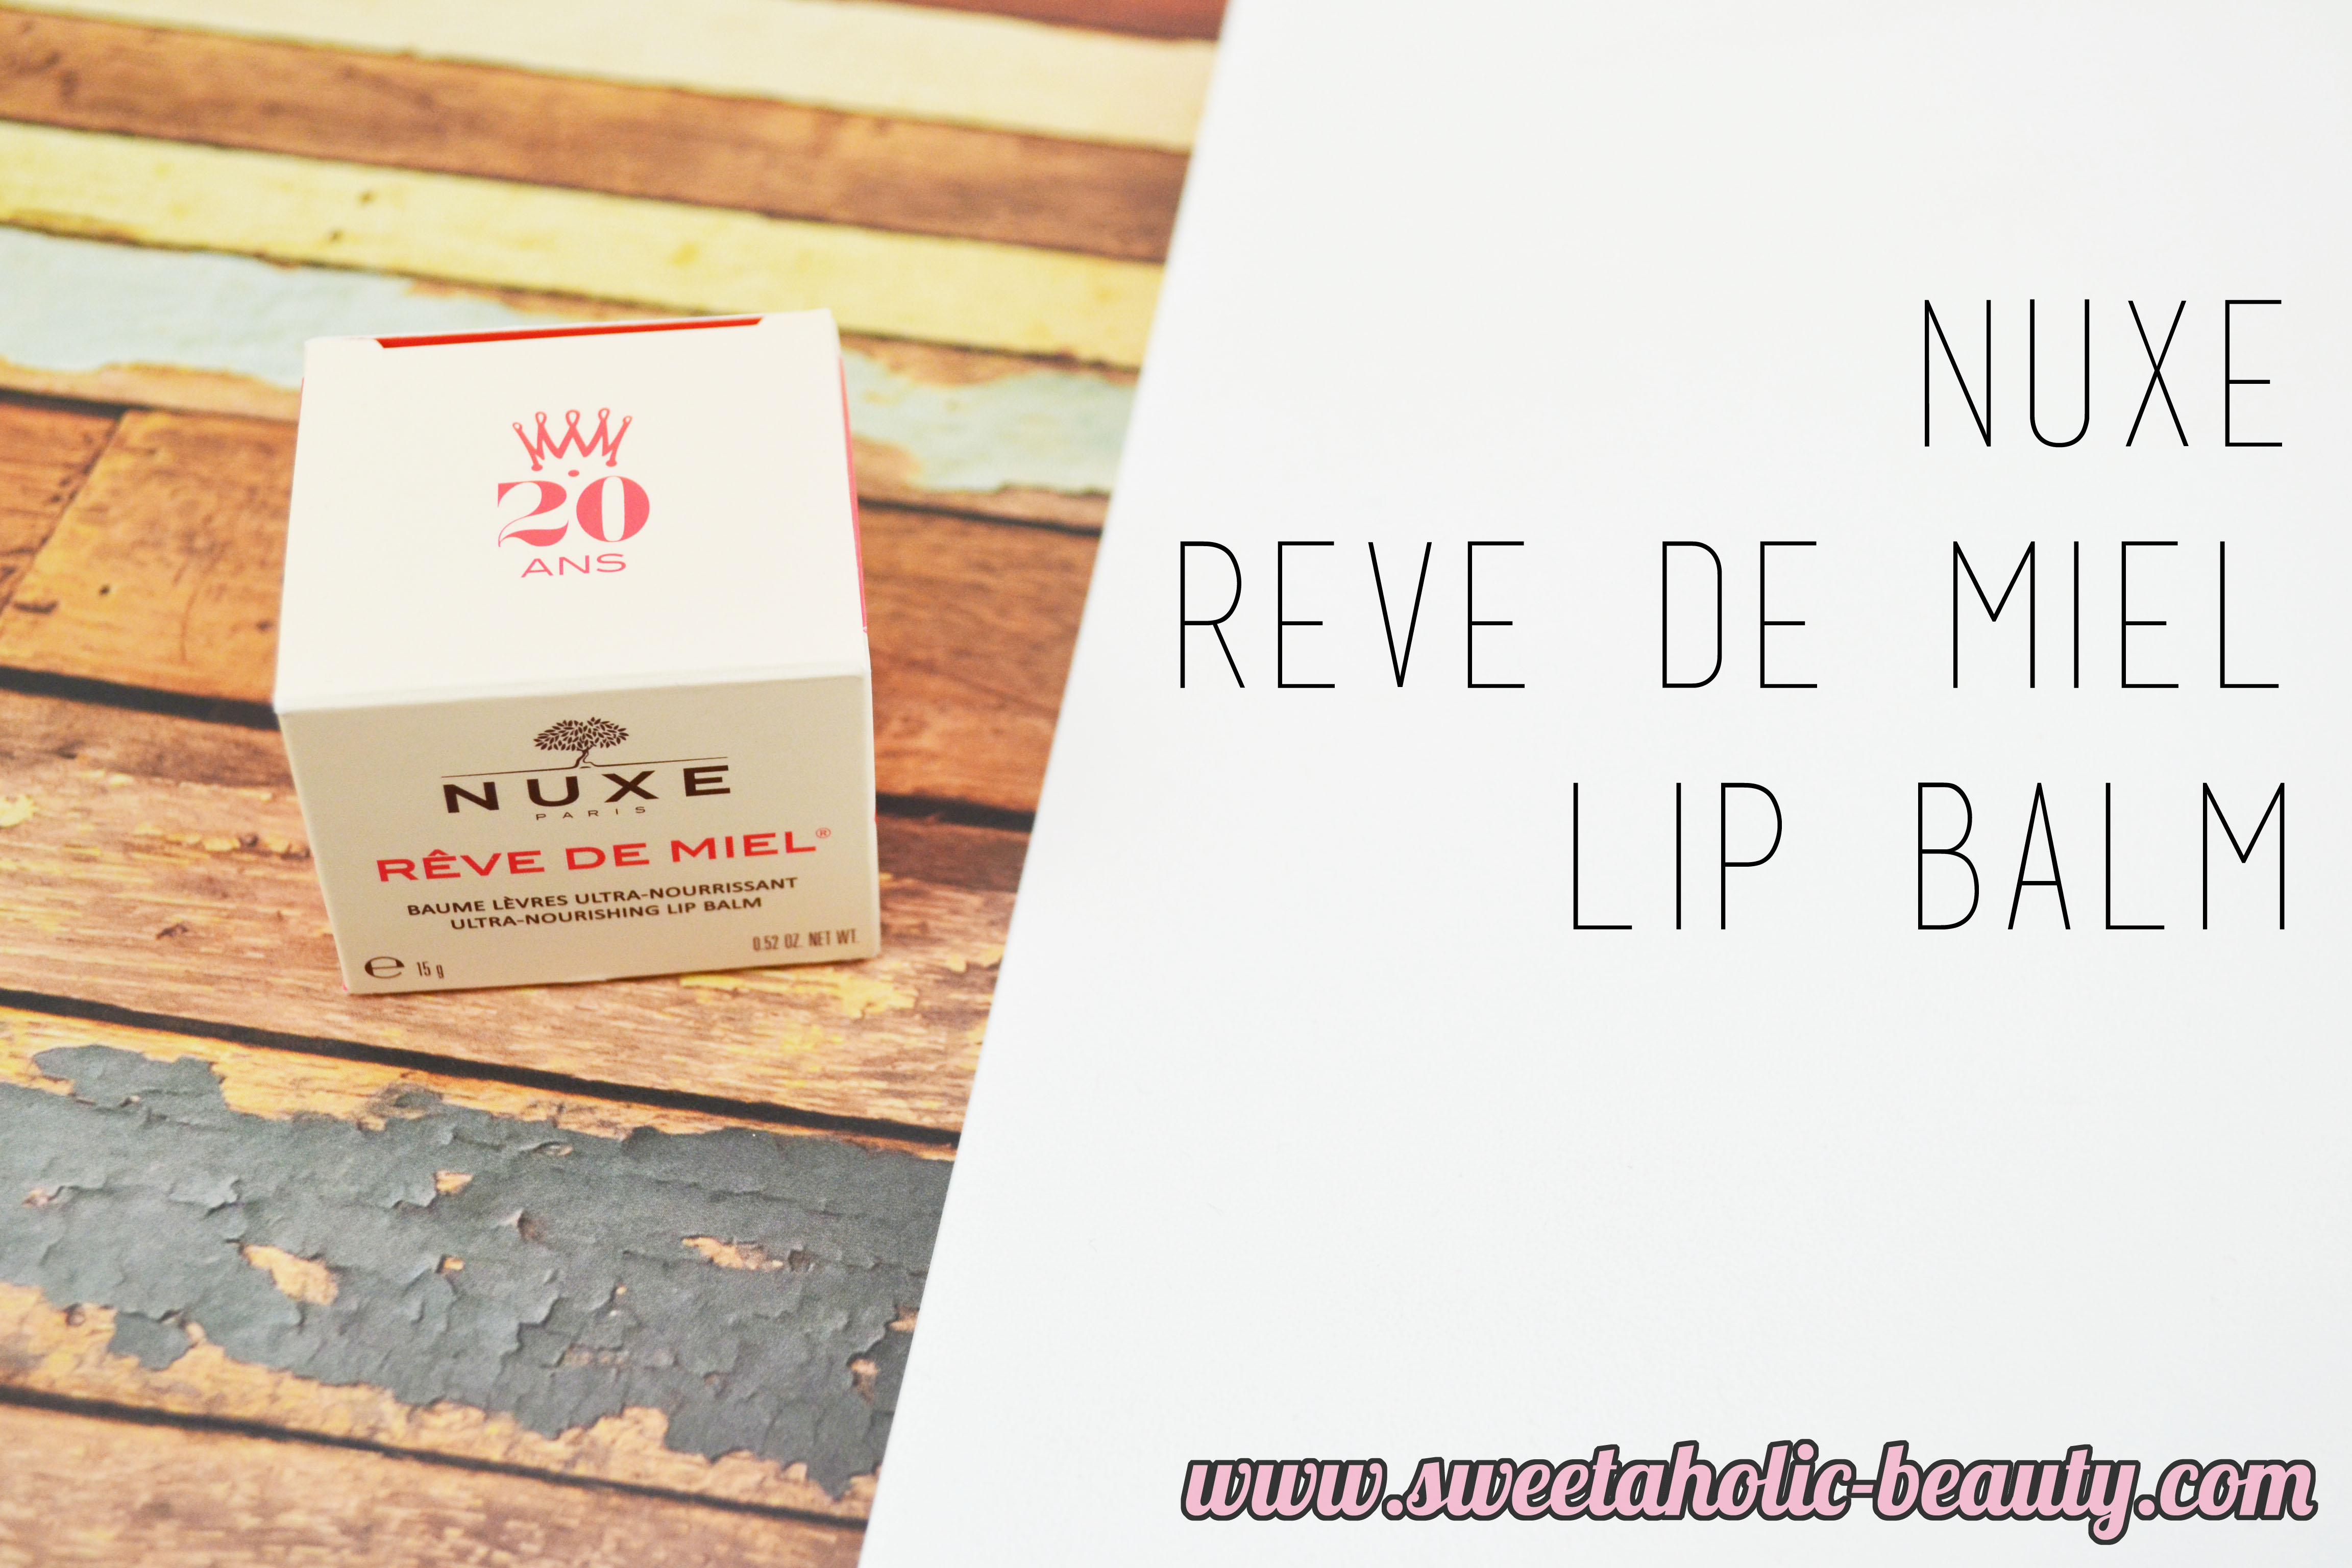 Nuxe Reve de Miel Lip Balm Review - Sweetaholic Beauty